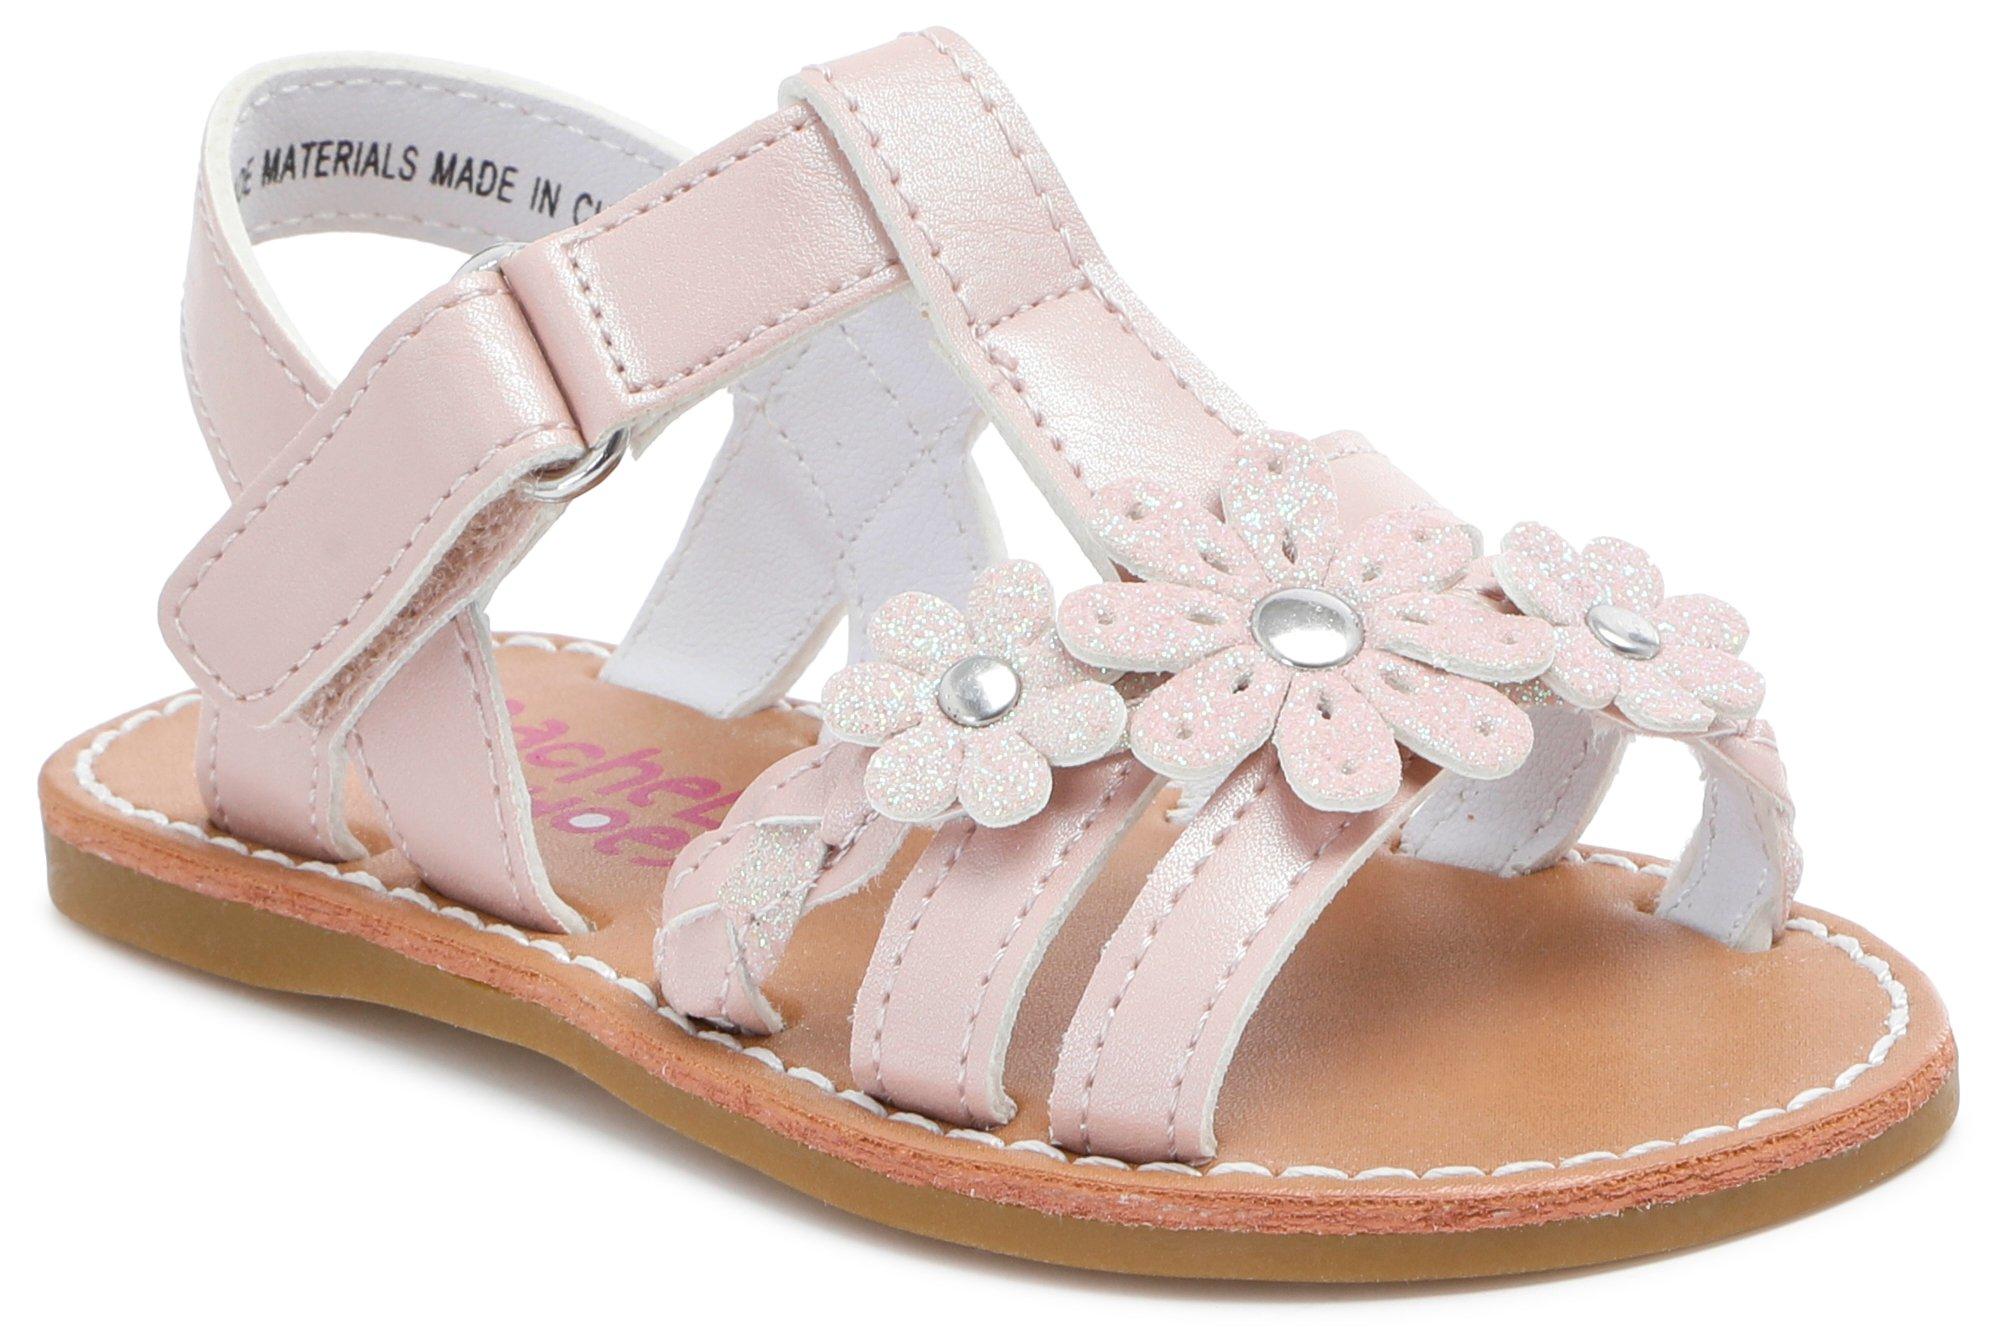 Toddler Girls Pink Pearl Sandals